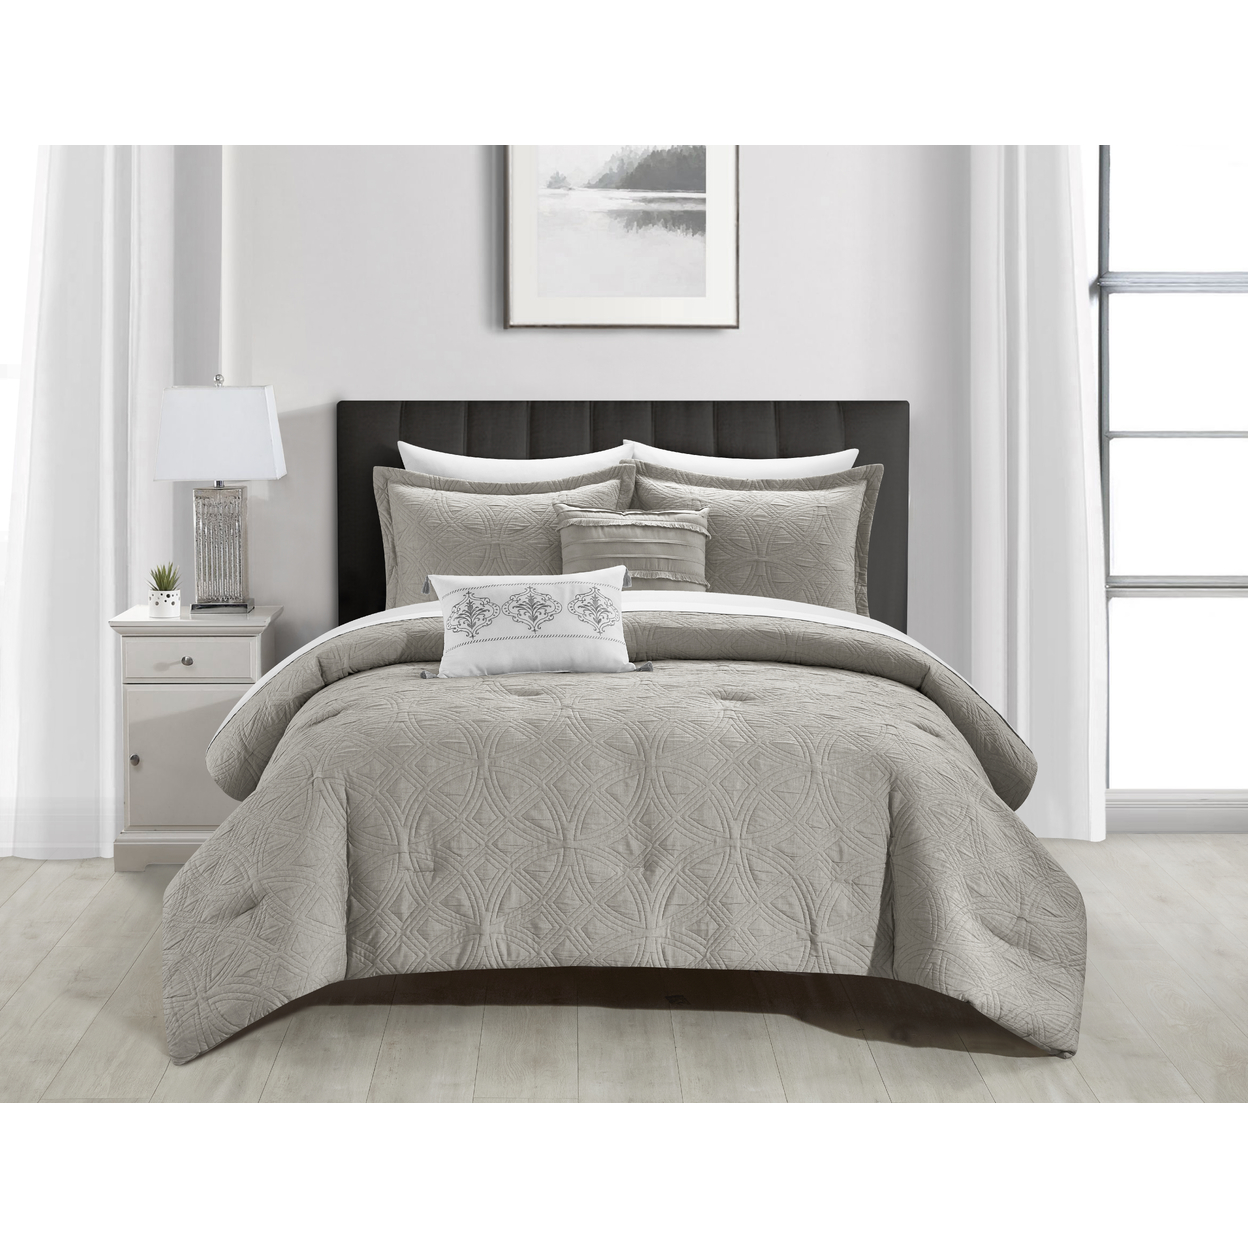 Bartista 5 Piece Cotton Blend Comforter Set Jacquard - Grey, King